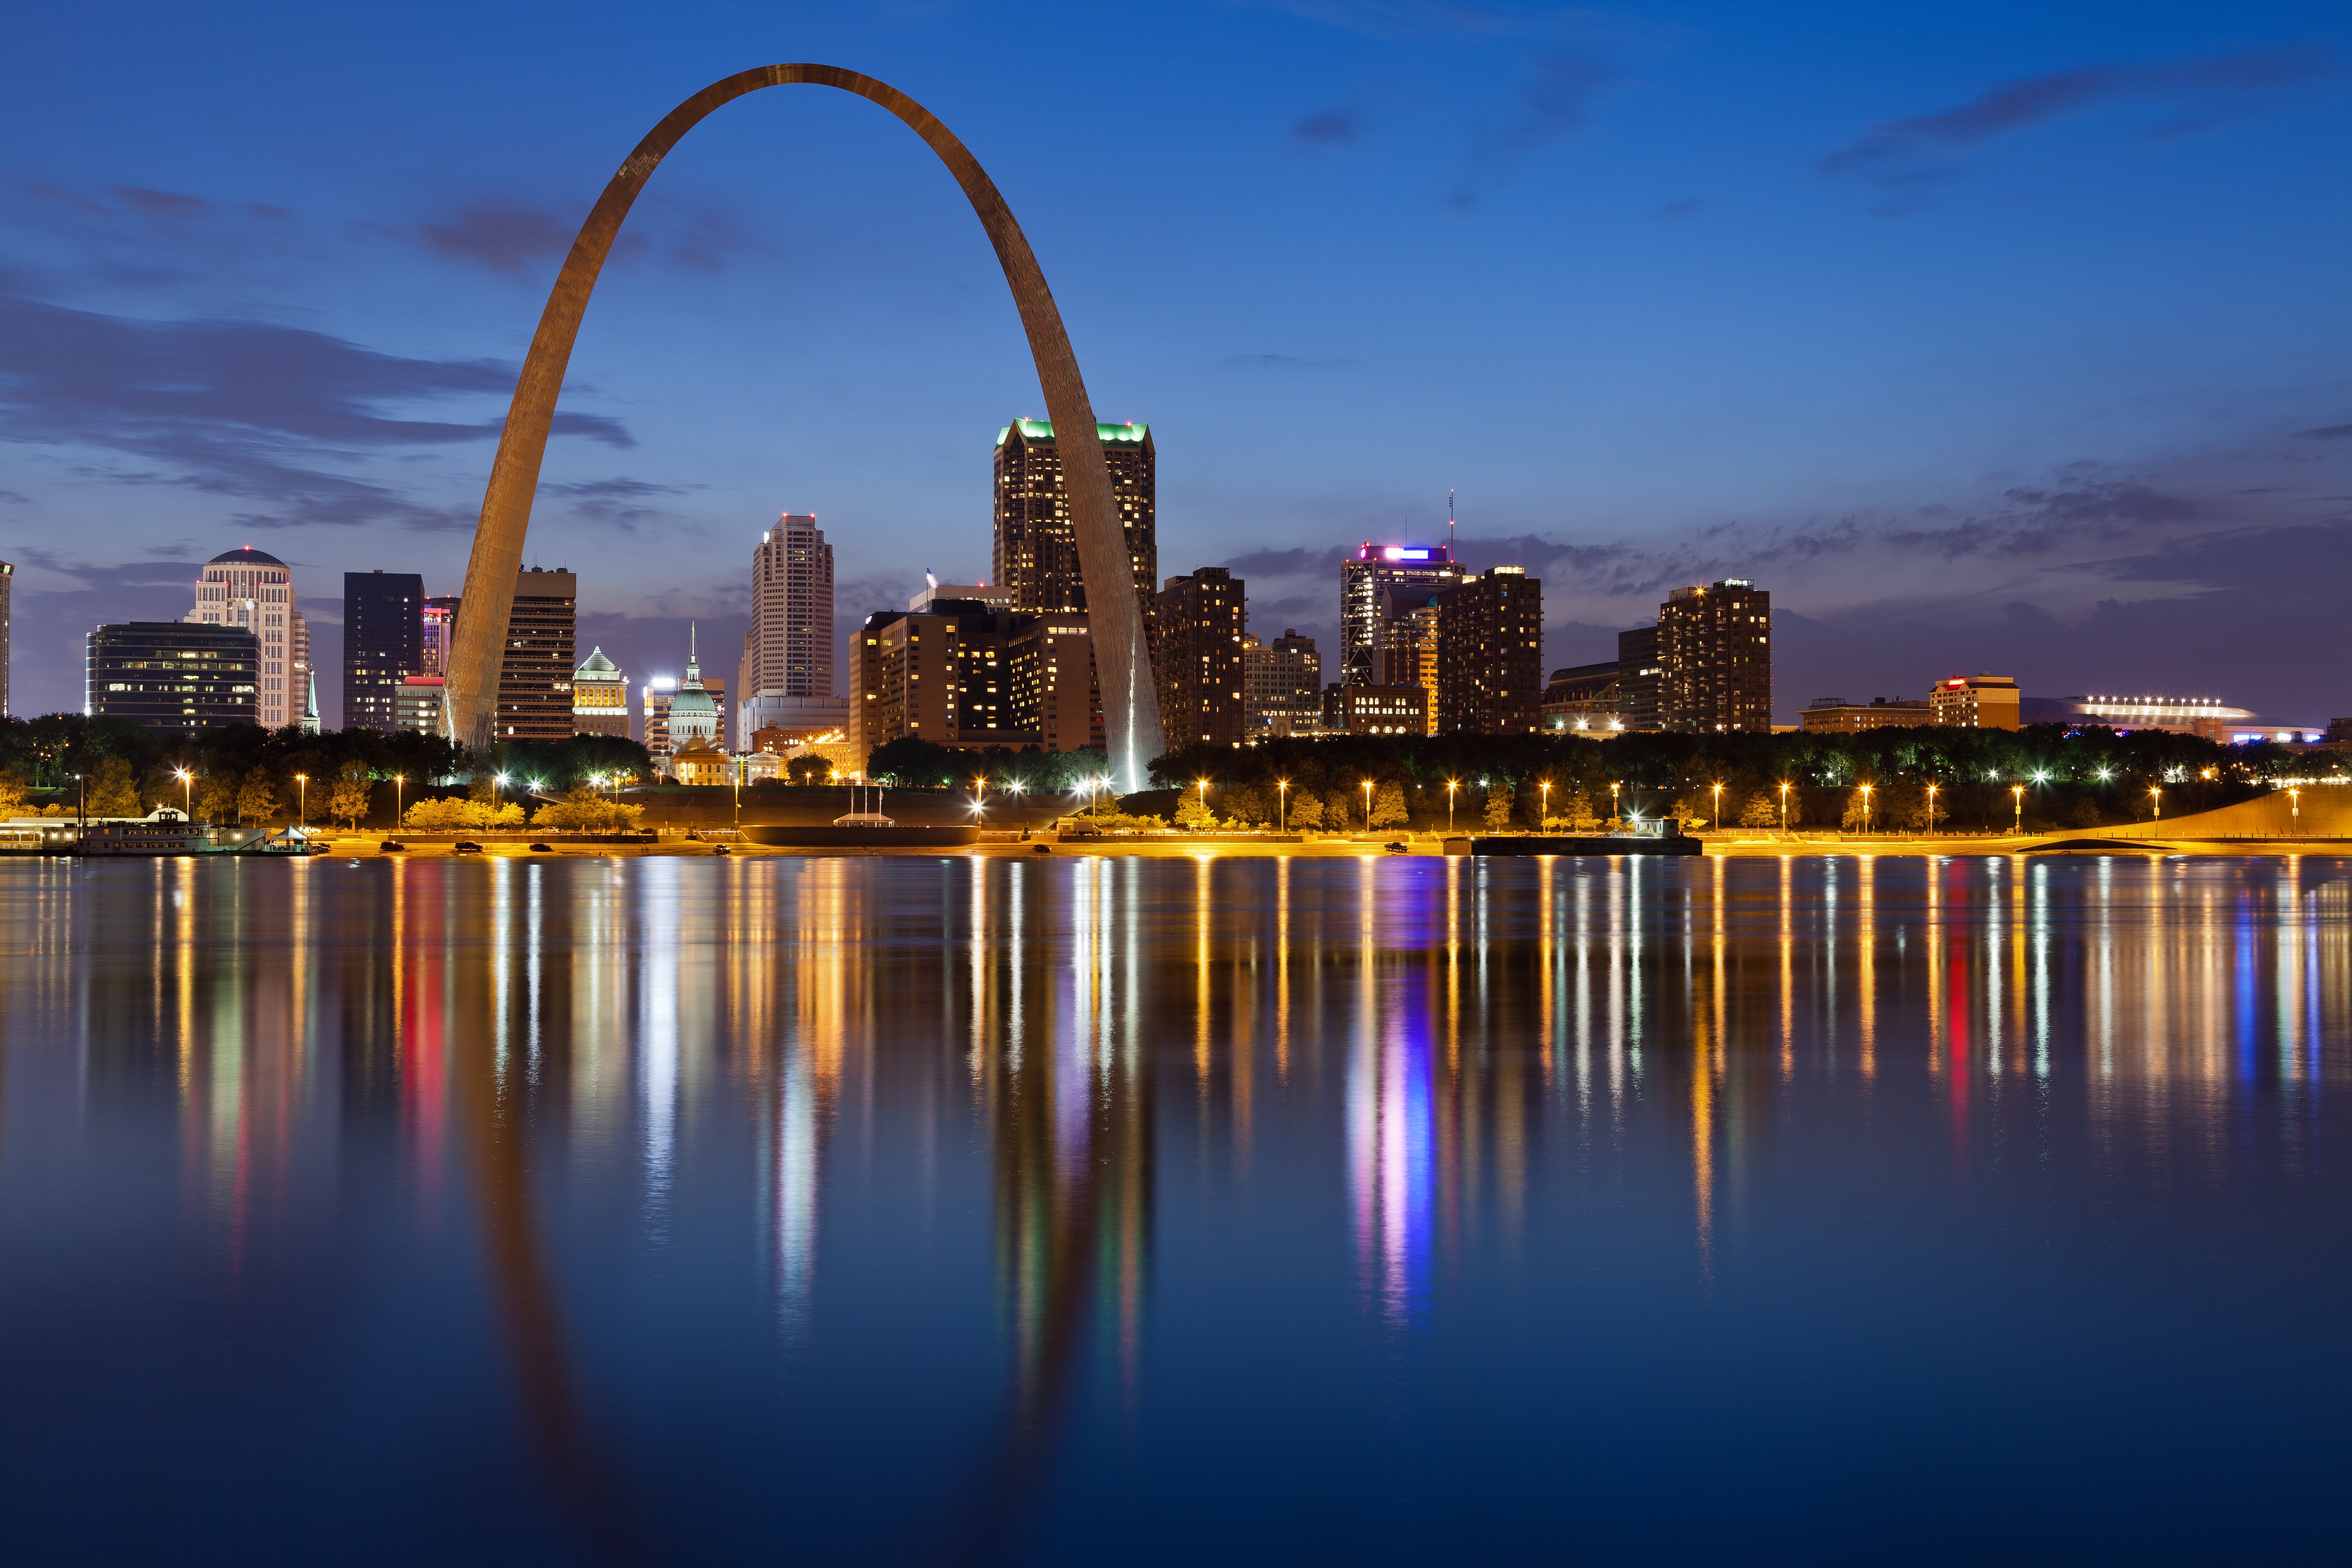 image respresenting Saint Louis, MO